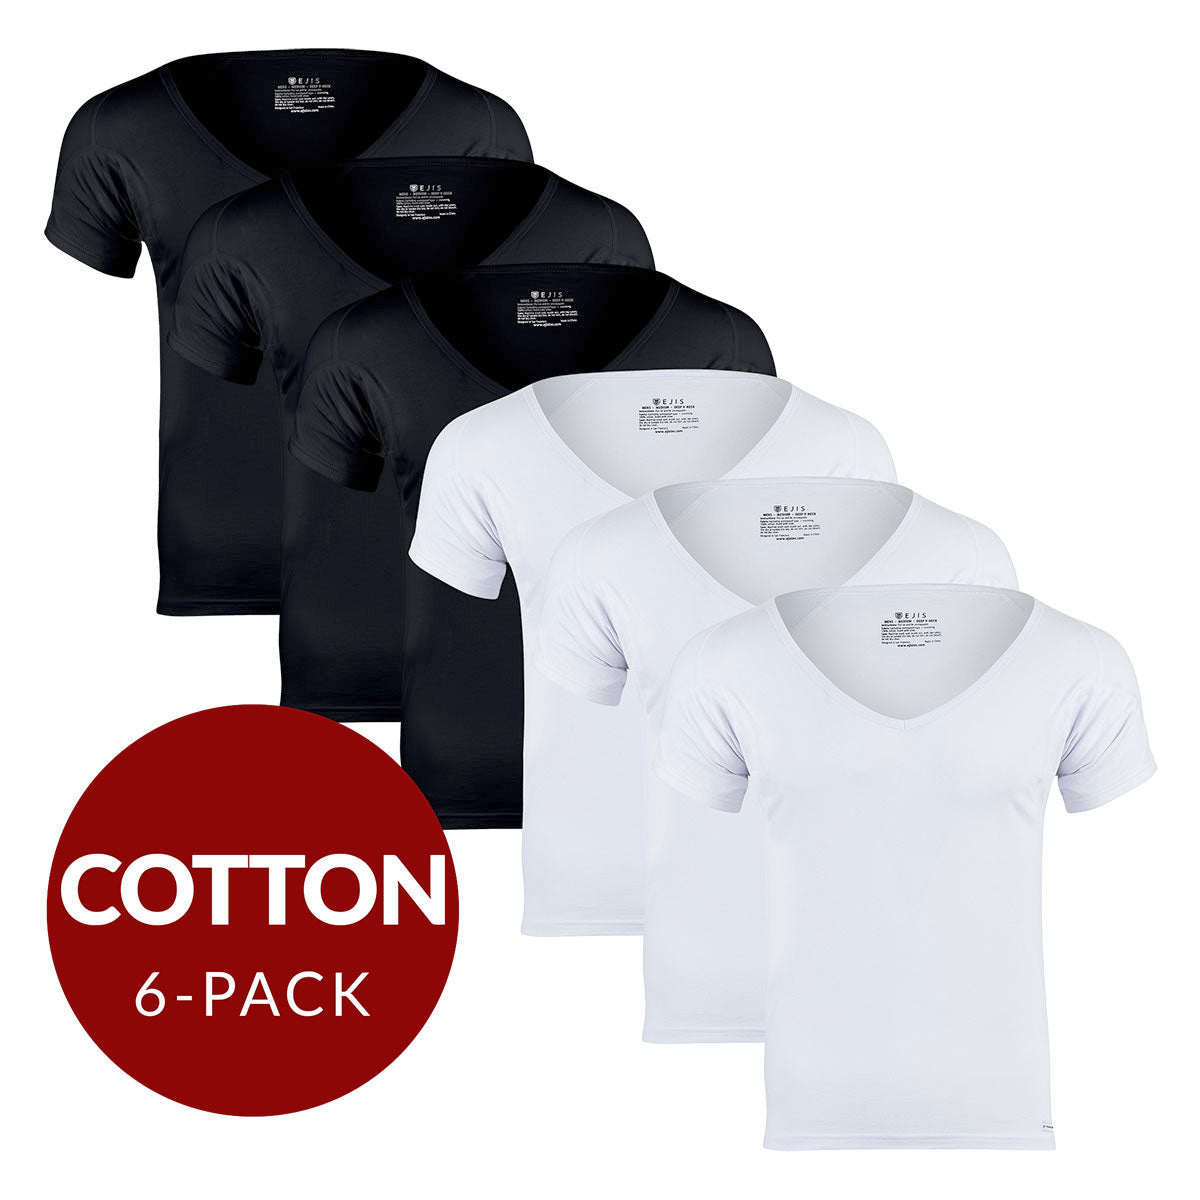 Deep V Cotton Sweat Proof Undershirt For Men - Mix 6-Pack (3x White, Black) - Ejis